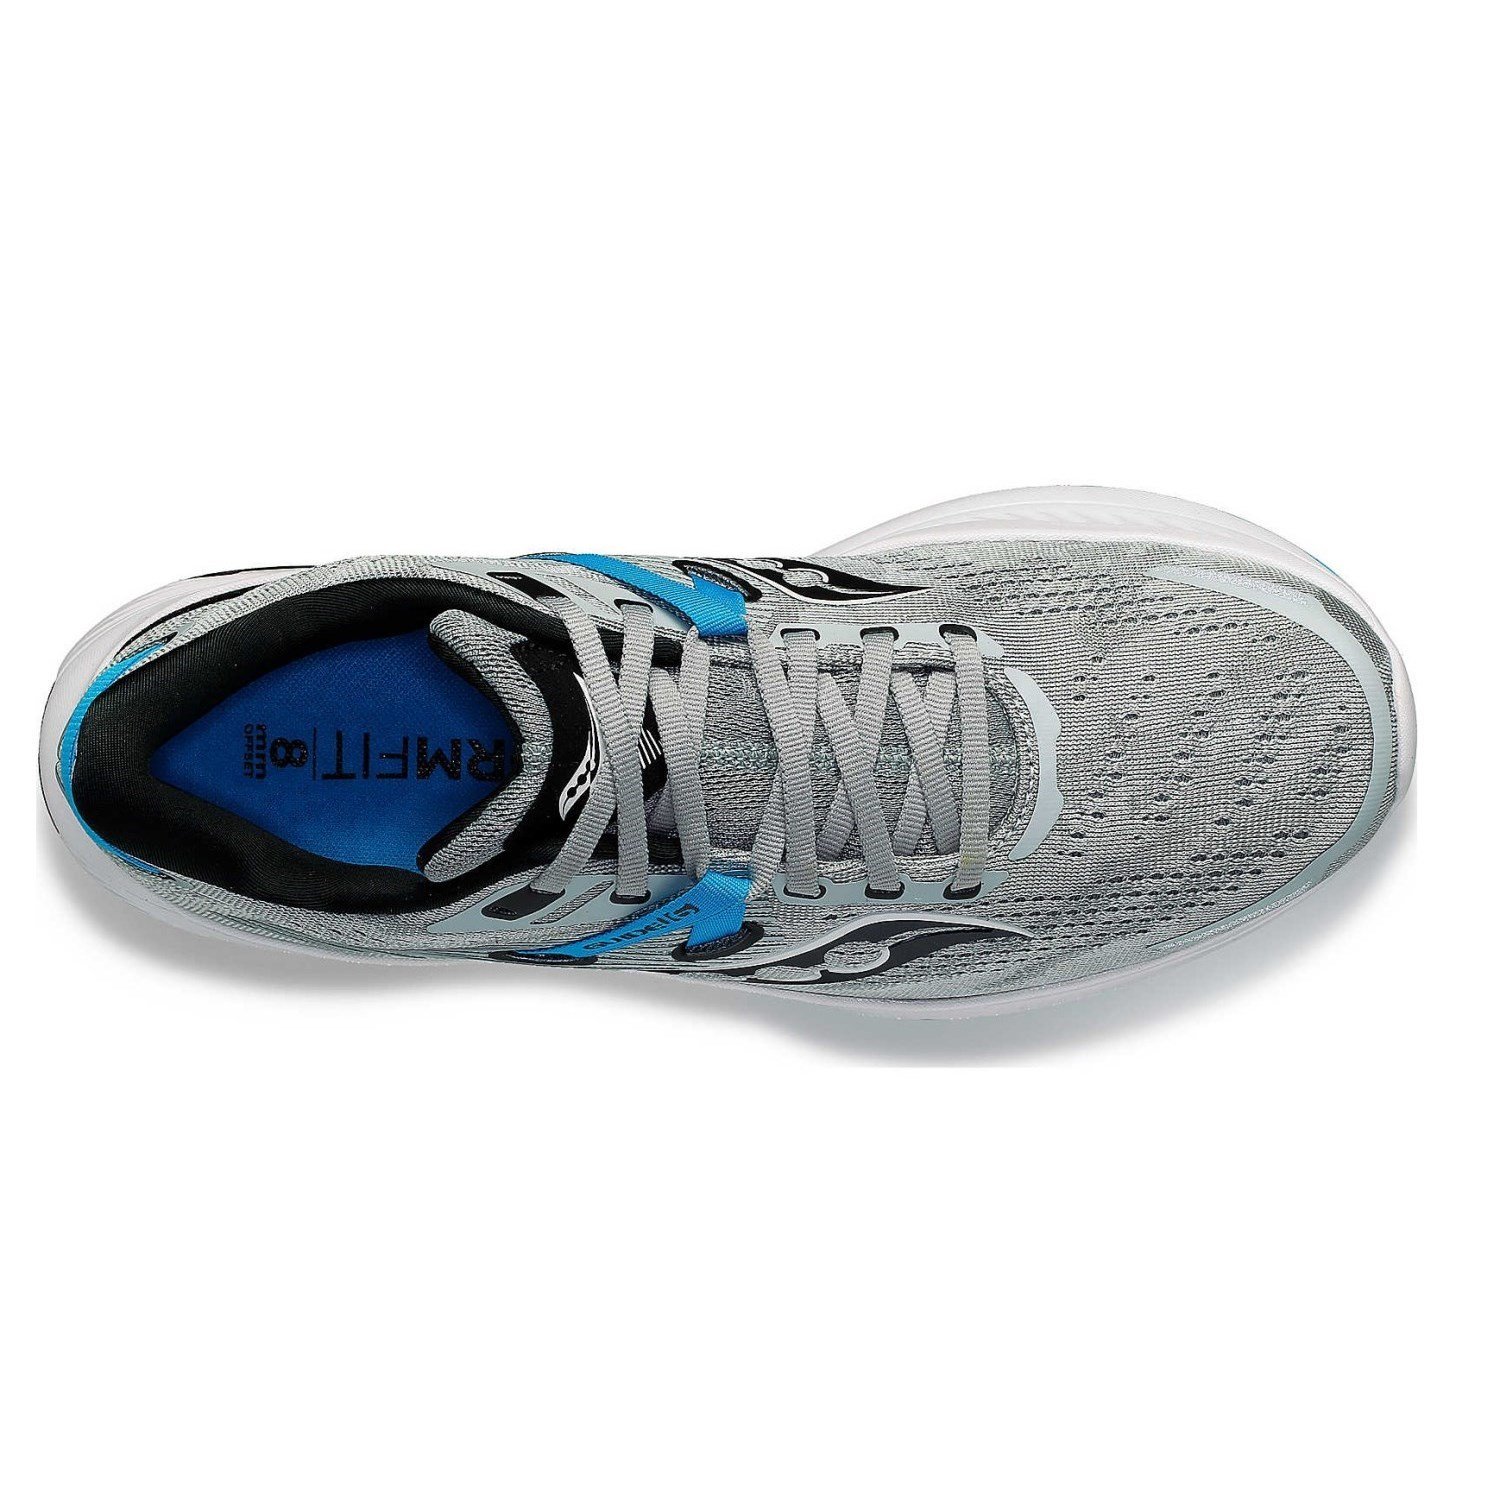 Saucony Guide 16 - Mens Running Shoes - Concrete/Vizi Blue | Sportitude